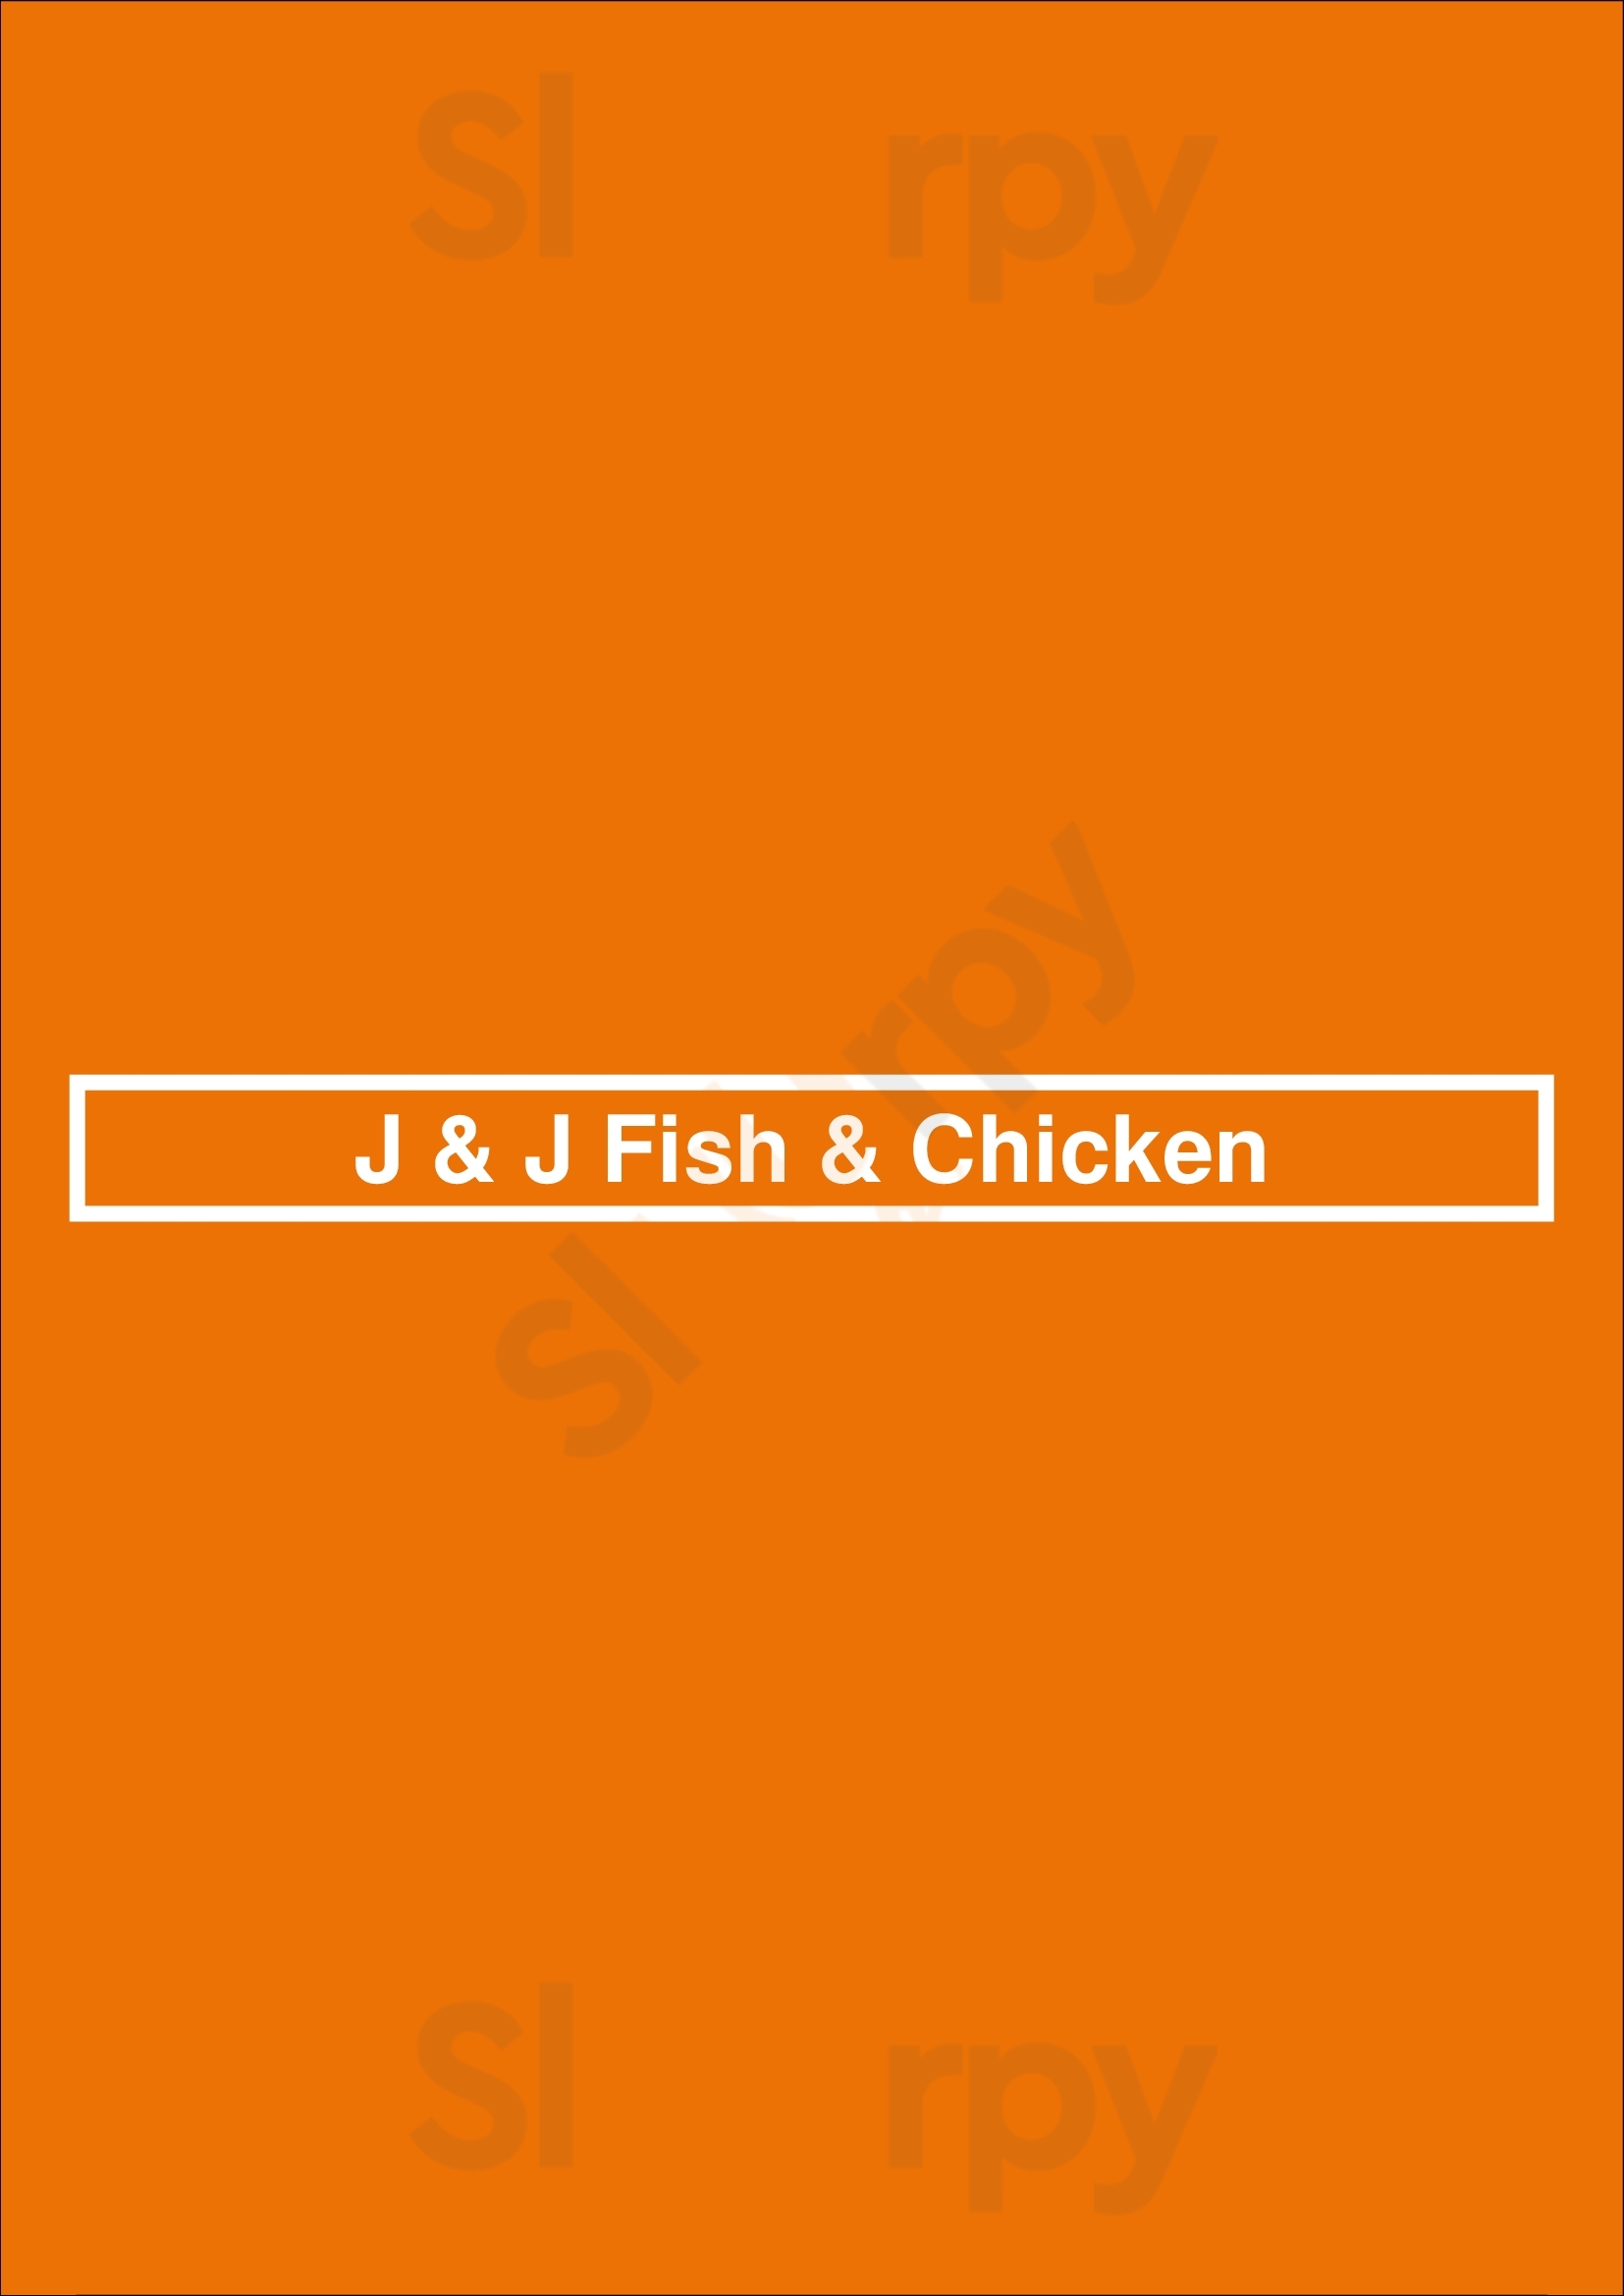 J & J Fish & Chicken Saint Paul Menu - 1